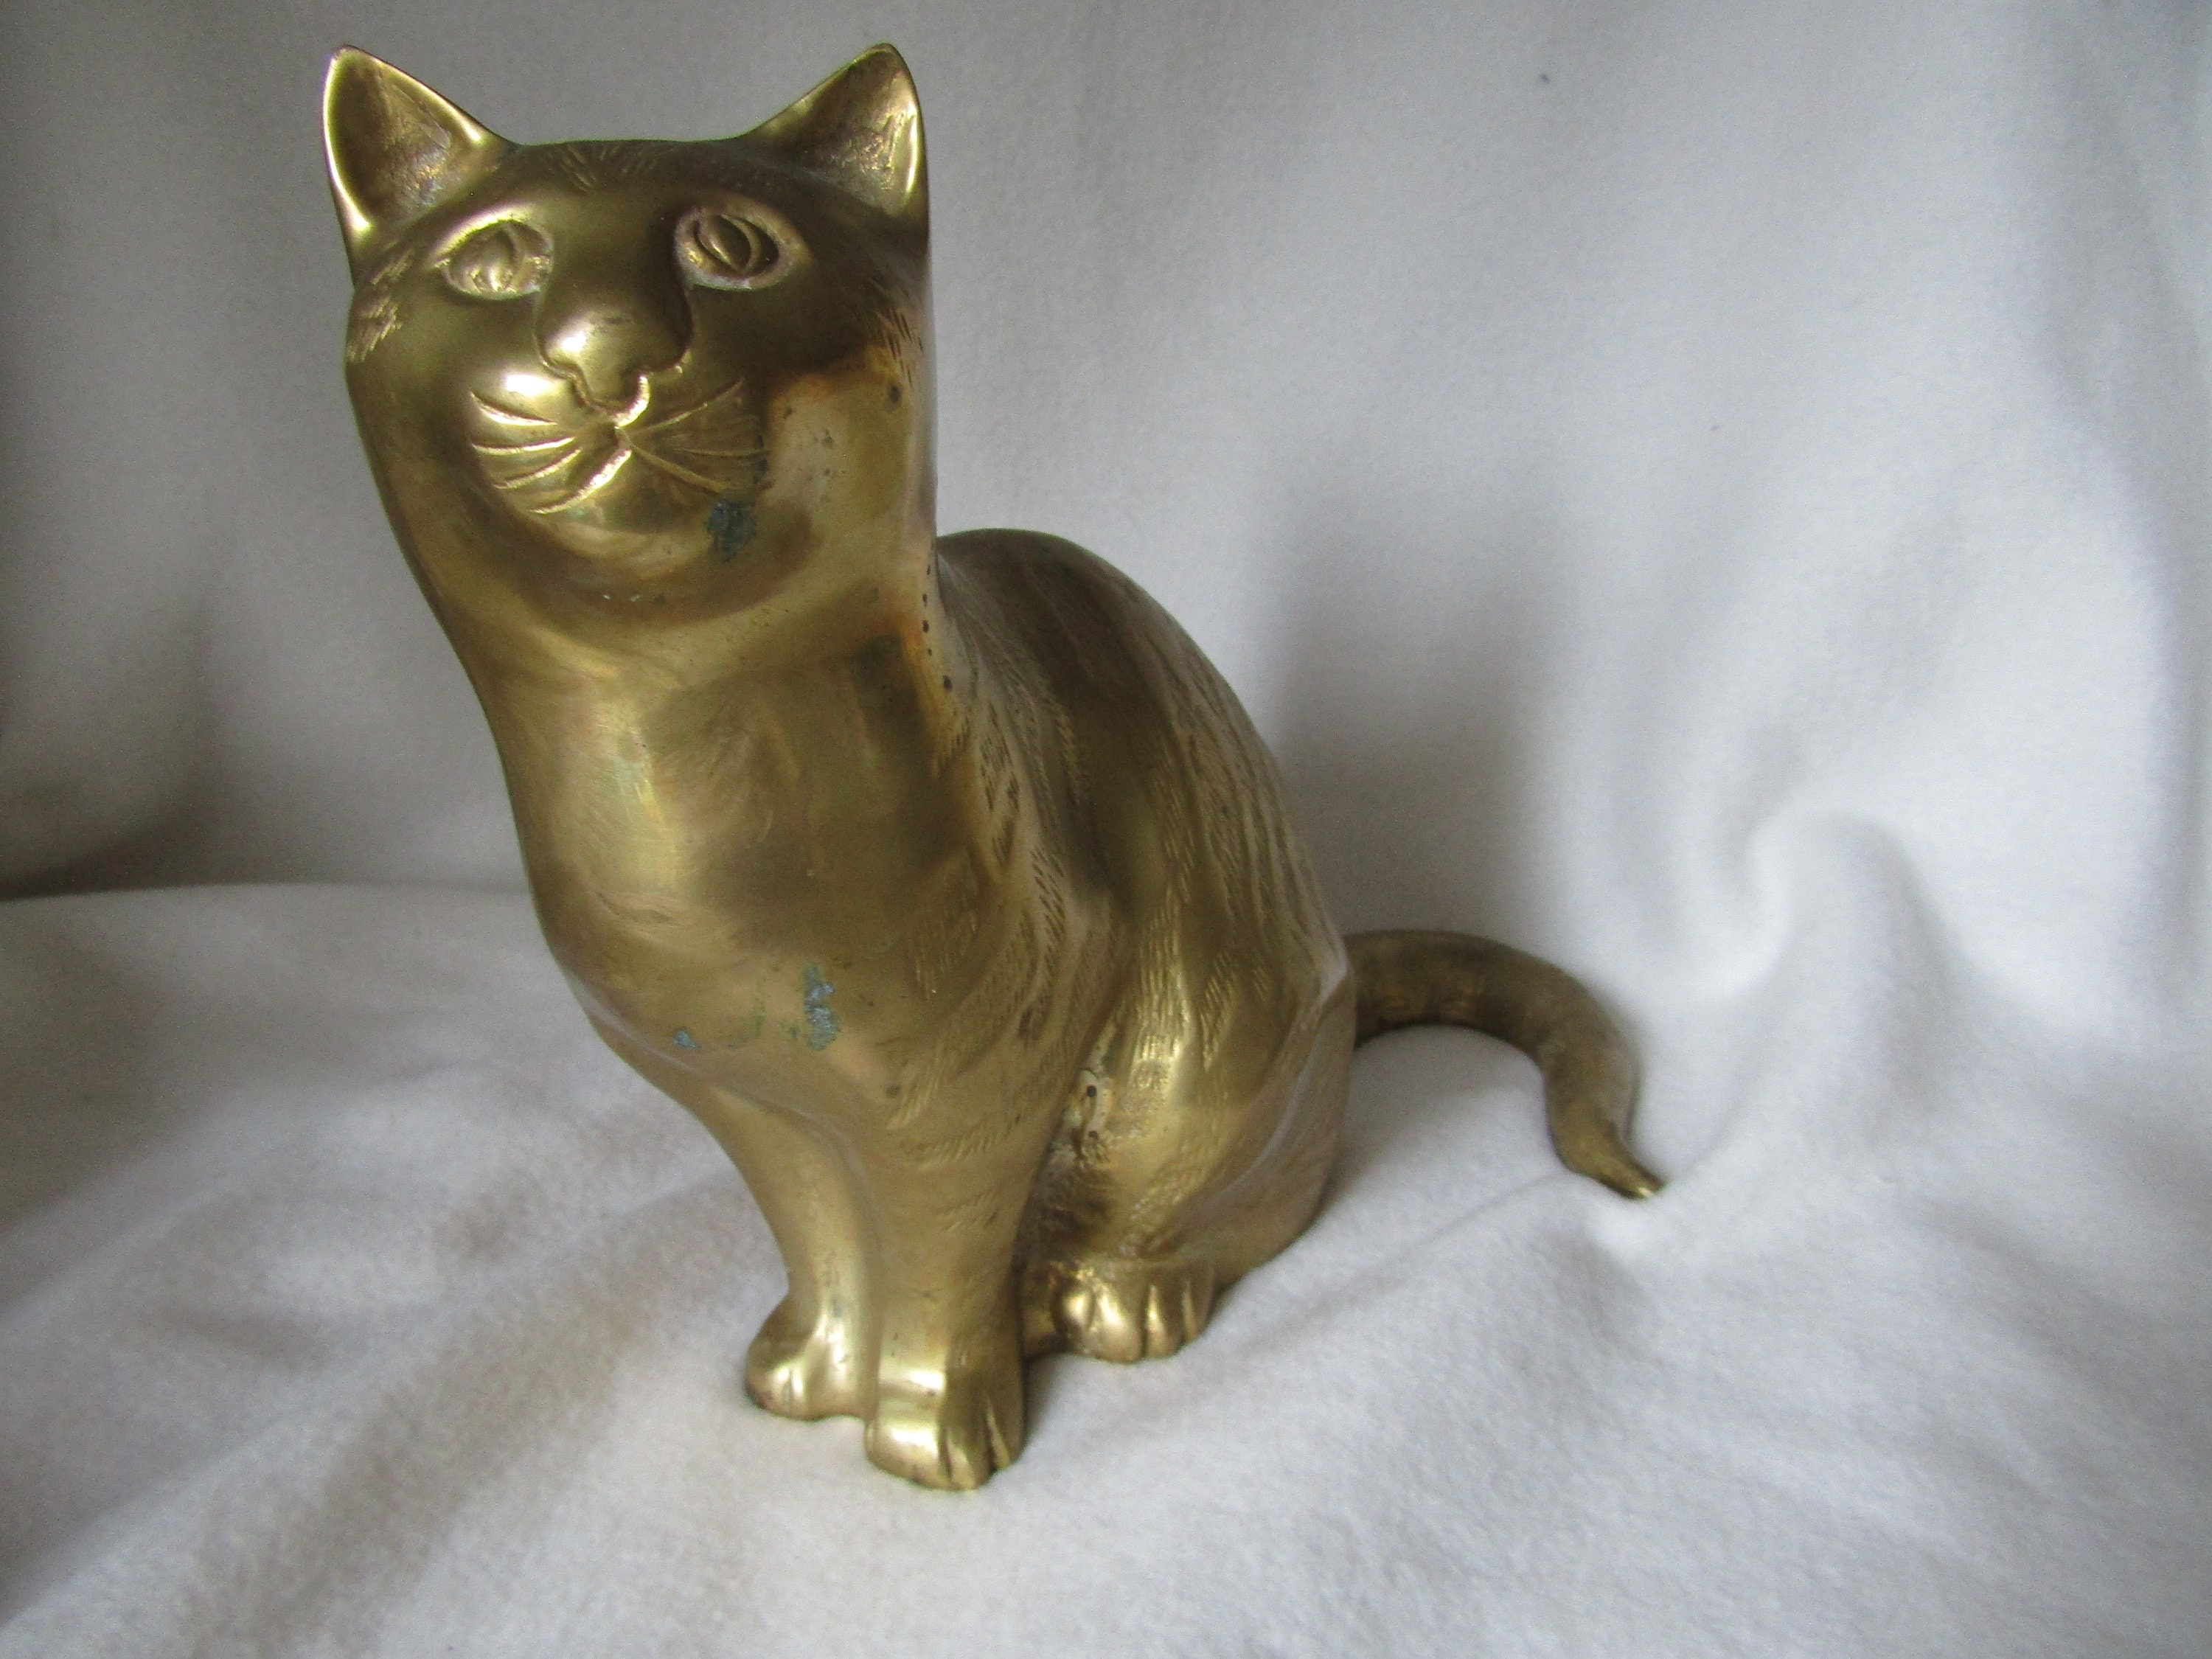 Small Brass Sleeping CAT Figurine Made in Korea Vintage MCM Style Kitty  Feline